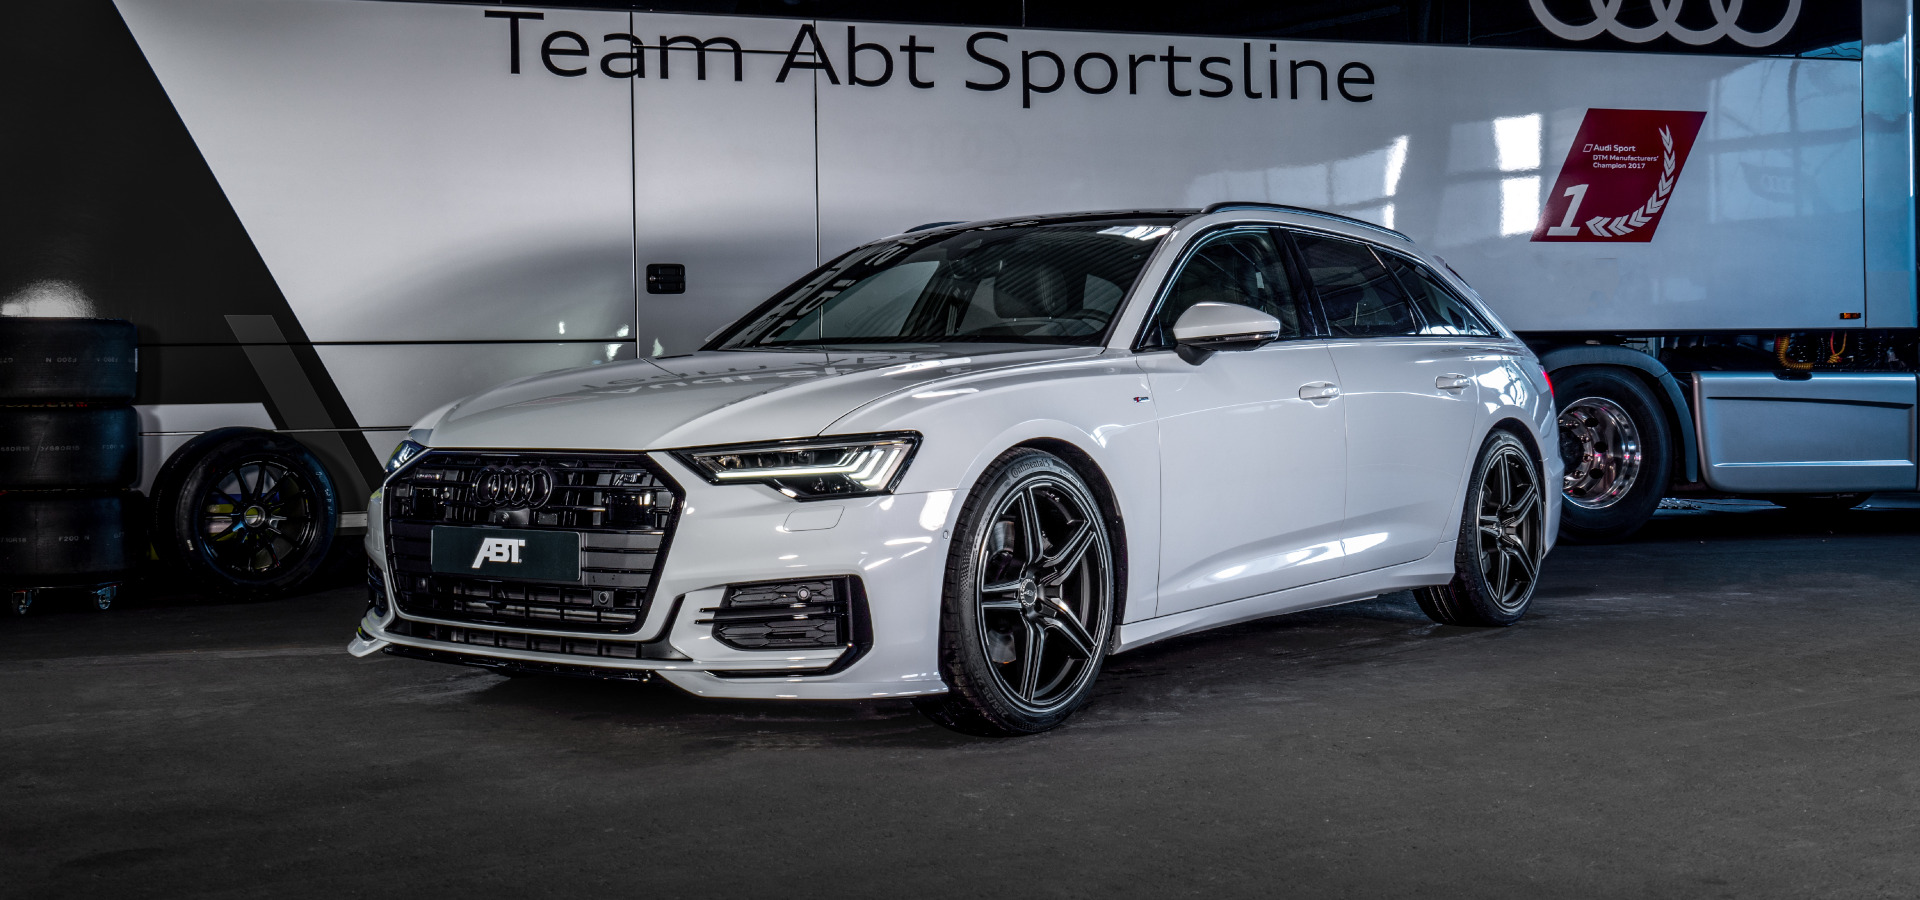 Audi A6 Abt Sportsline